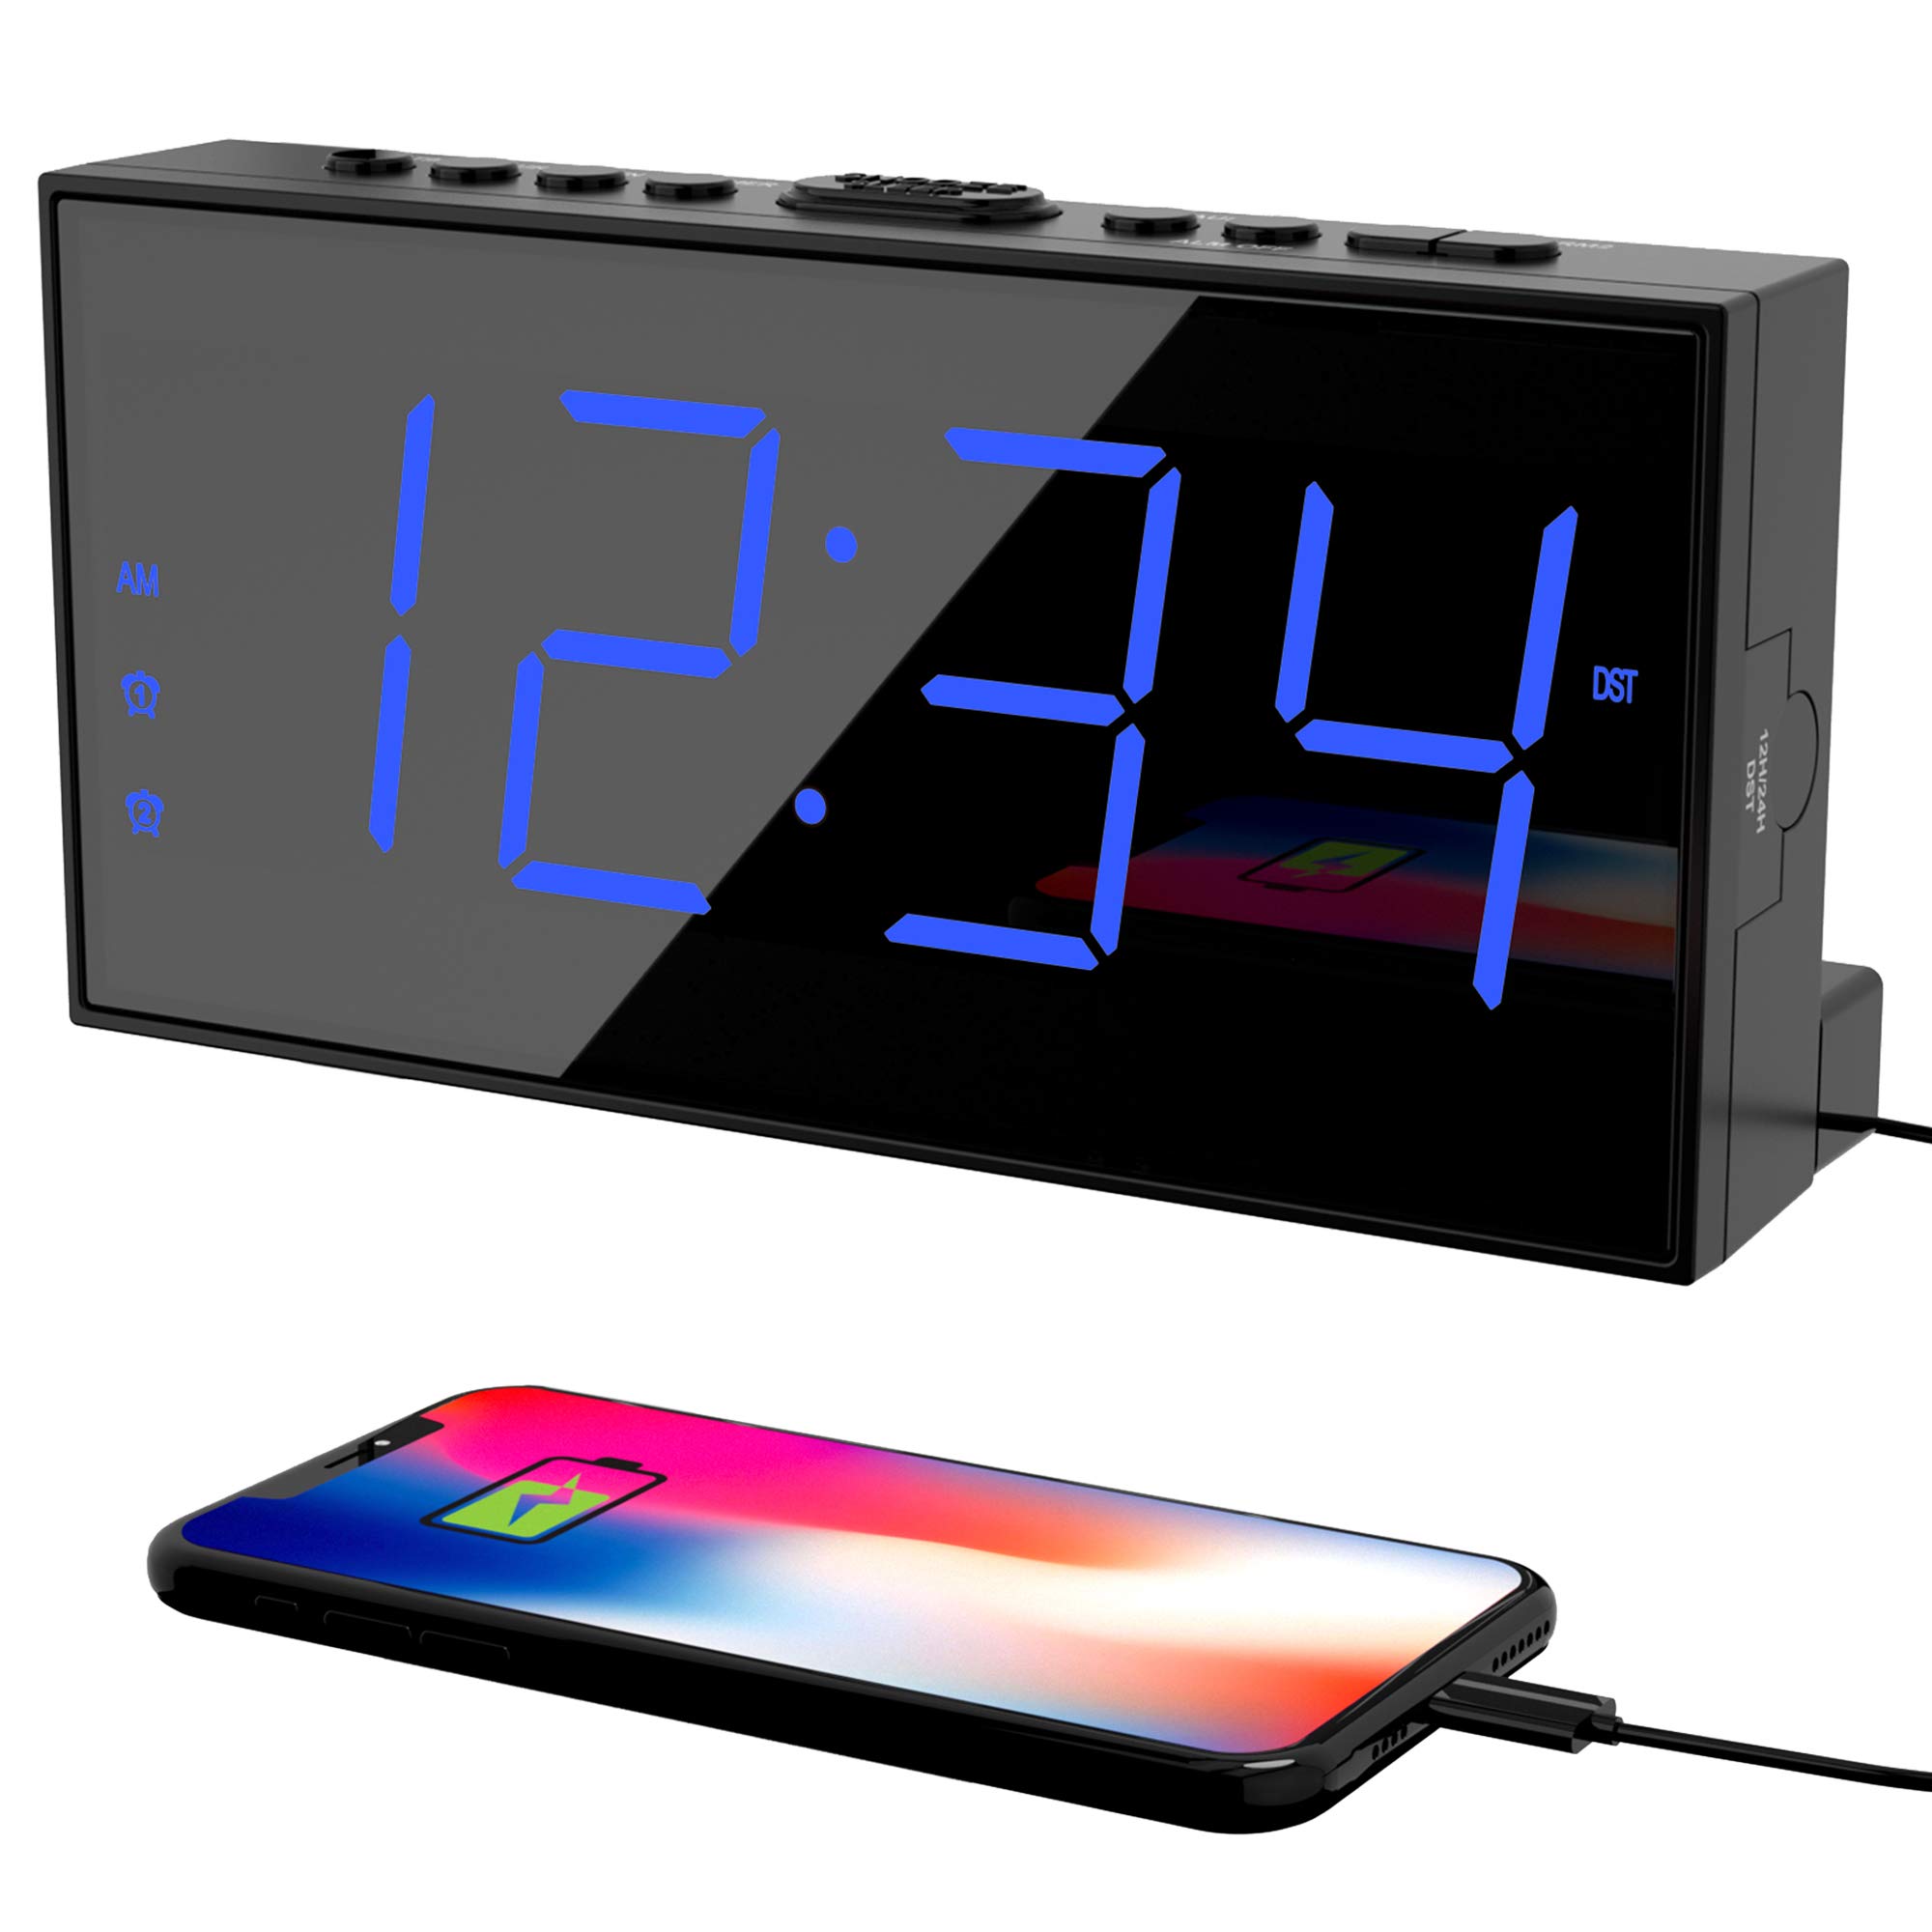 PPLEE Digital Dual Alarm Clock